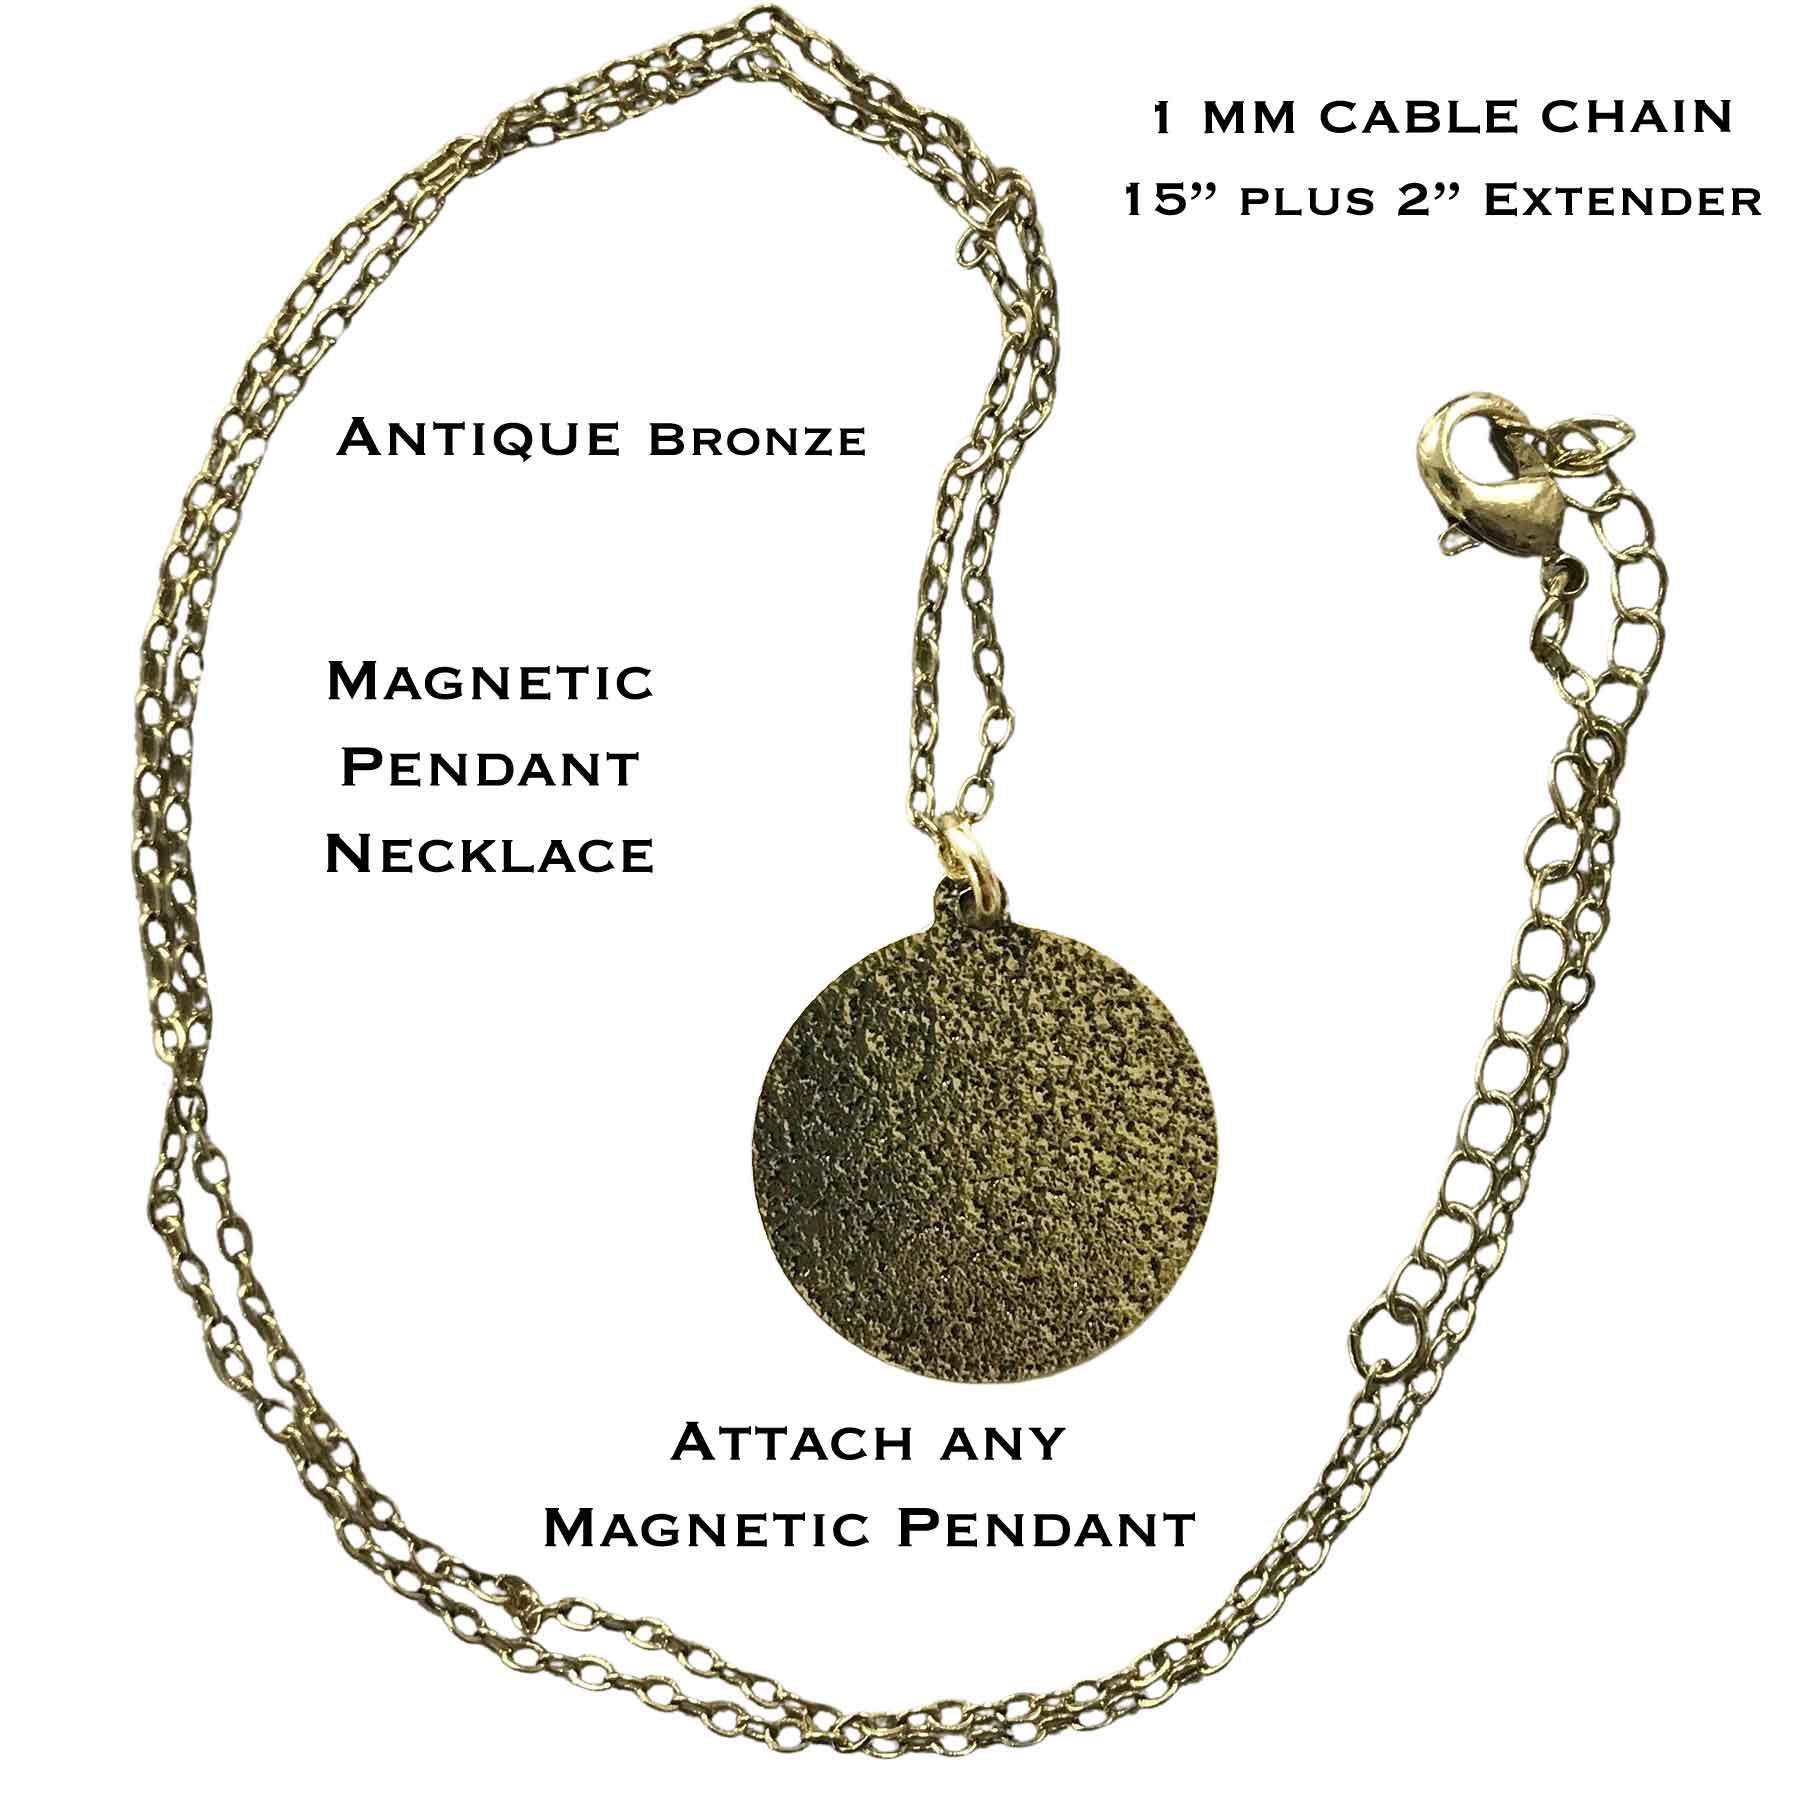 3790 - Fine Art Design Magnetic Brooches Magnetic Necklace for Pendants 3 MM 18" Plus 2" Extender (Antique Bronze) - 18